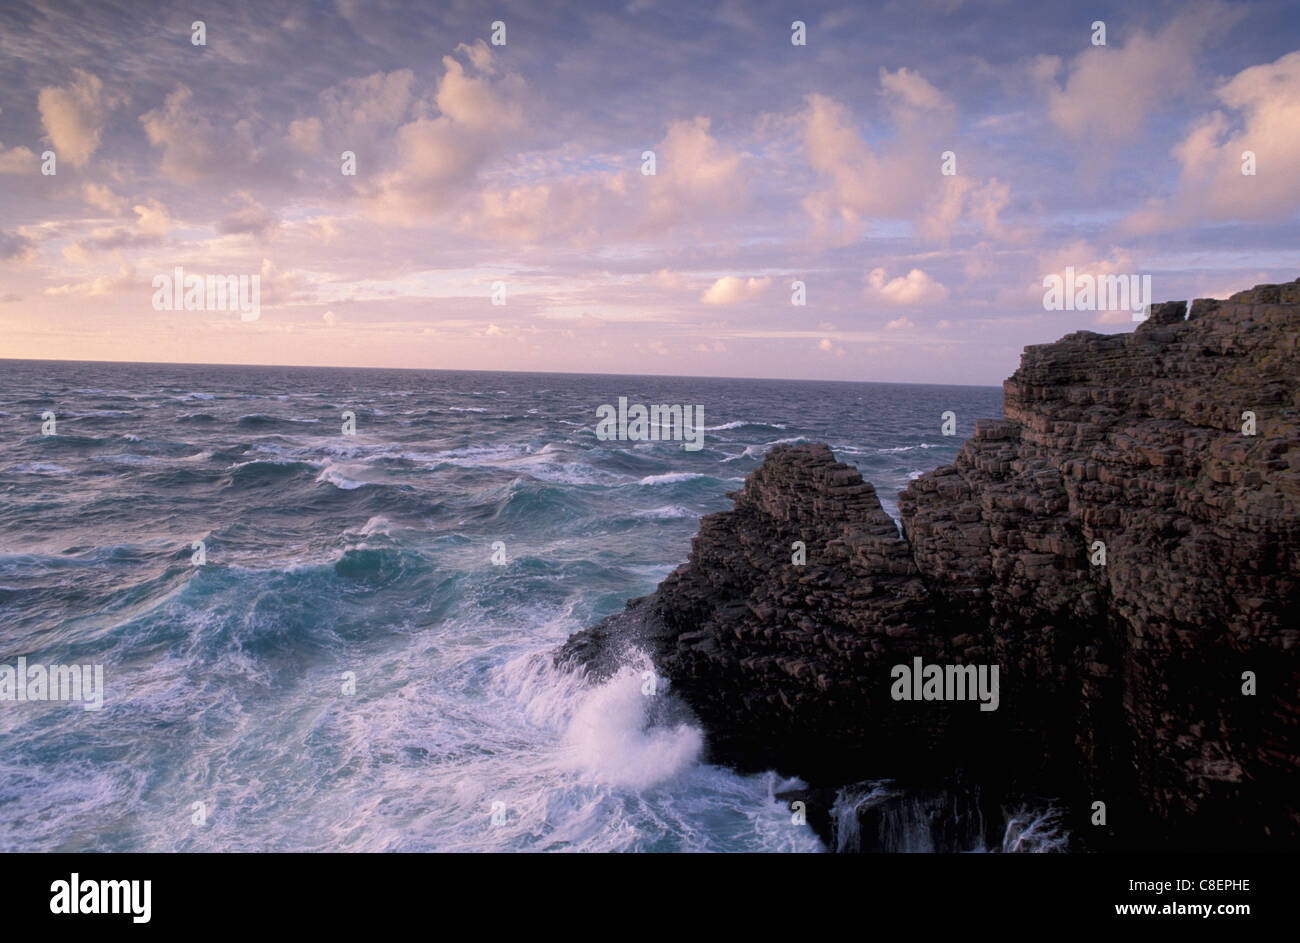 Sea, Cliffs, Cape Frehel, Brittany, France, Europe, rocks, waves Stock Photo